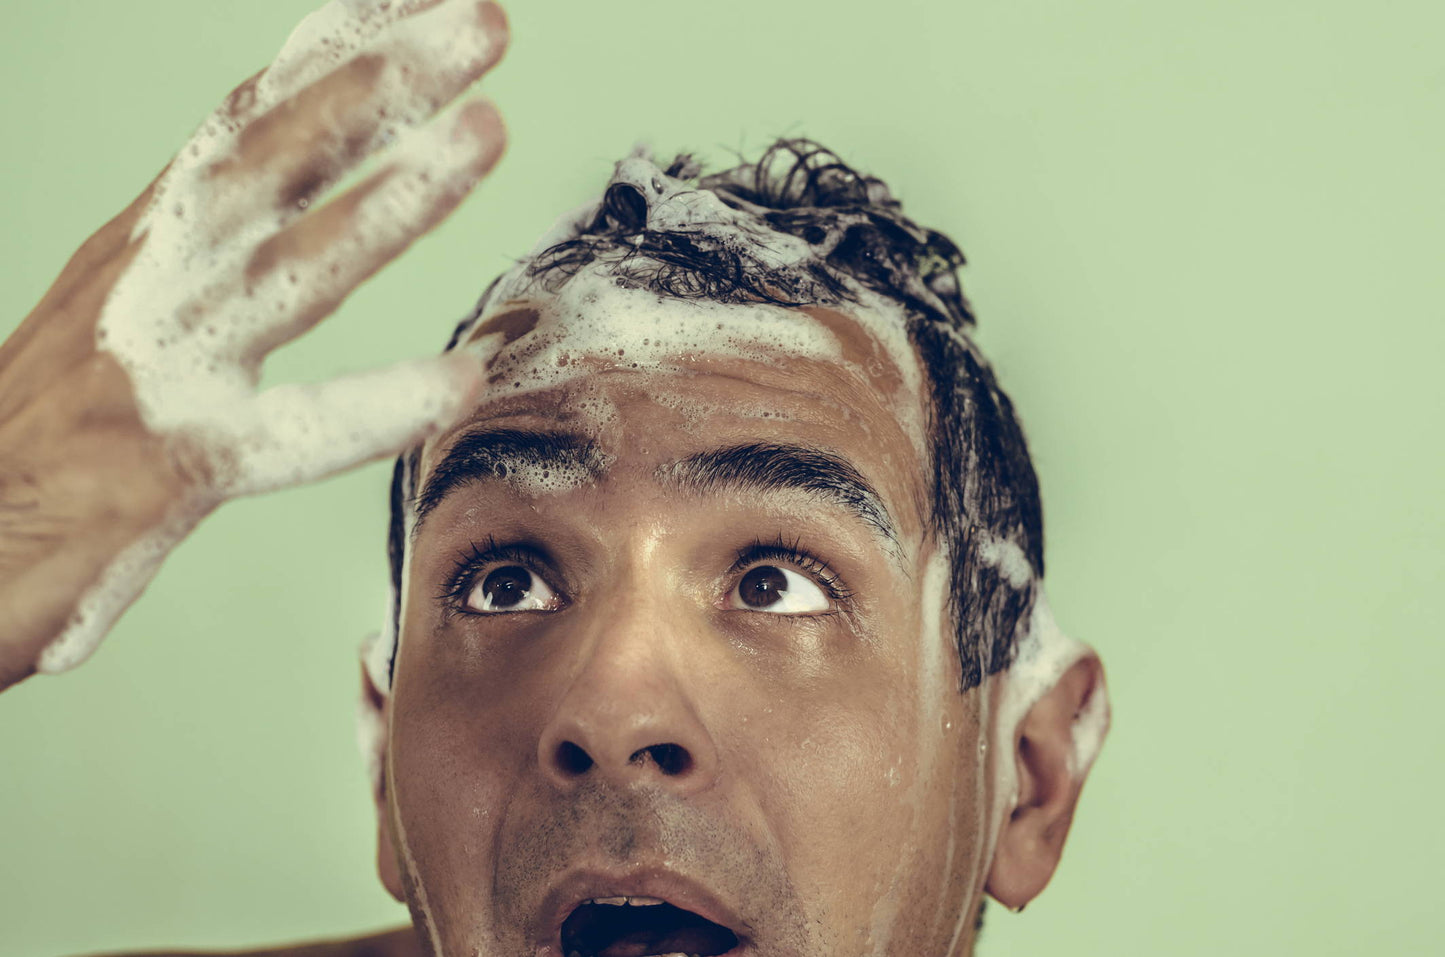 Do Hair Loss Shampoos Work to Stop Hair Loss?